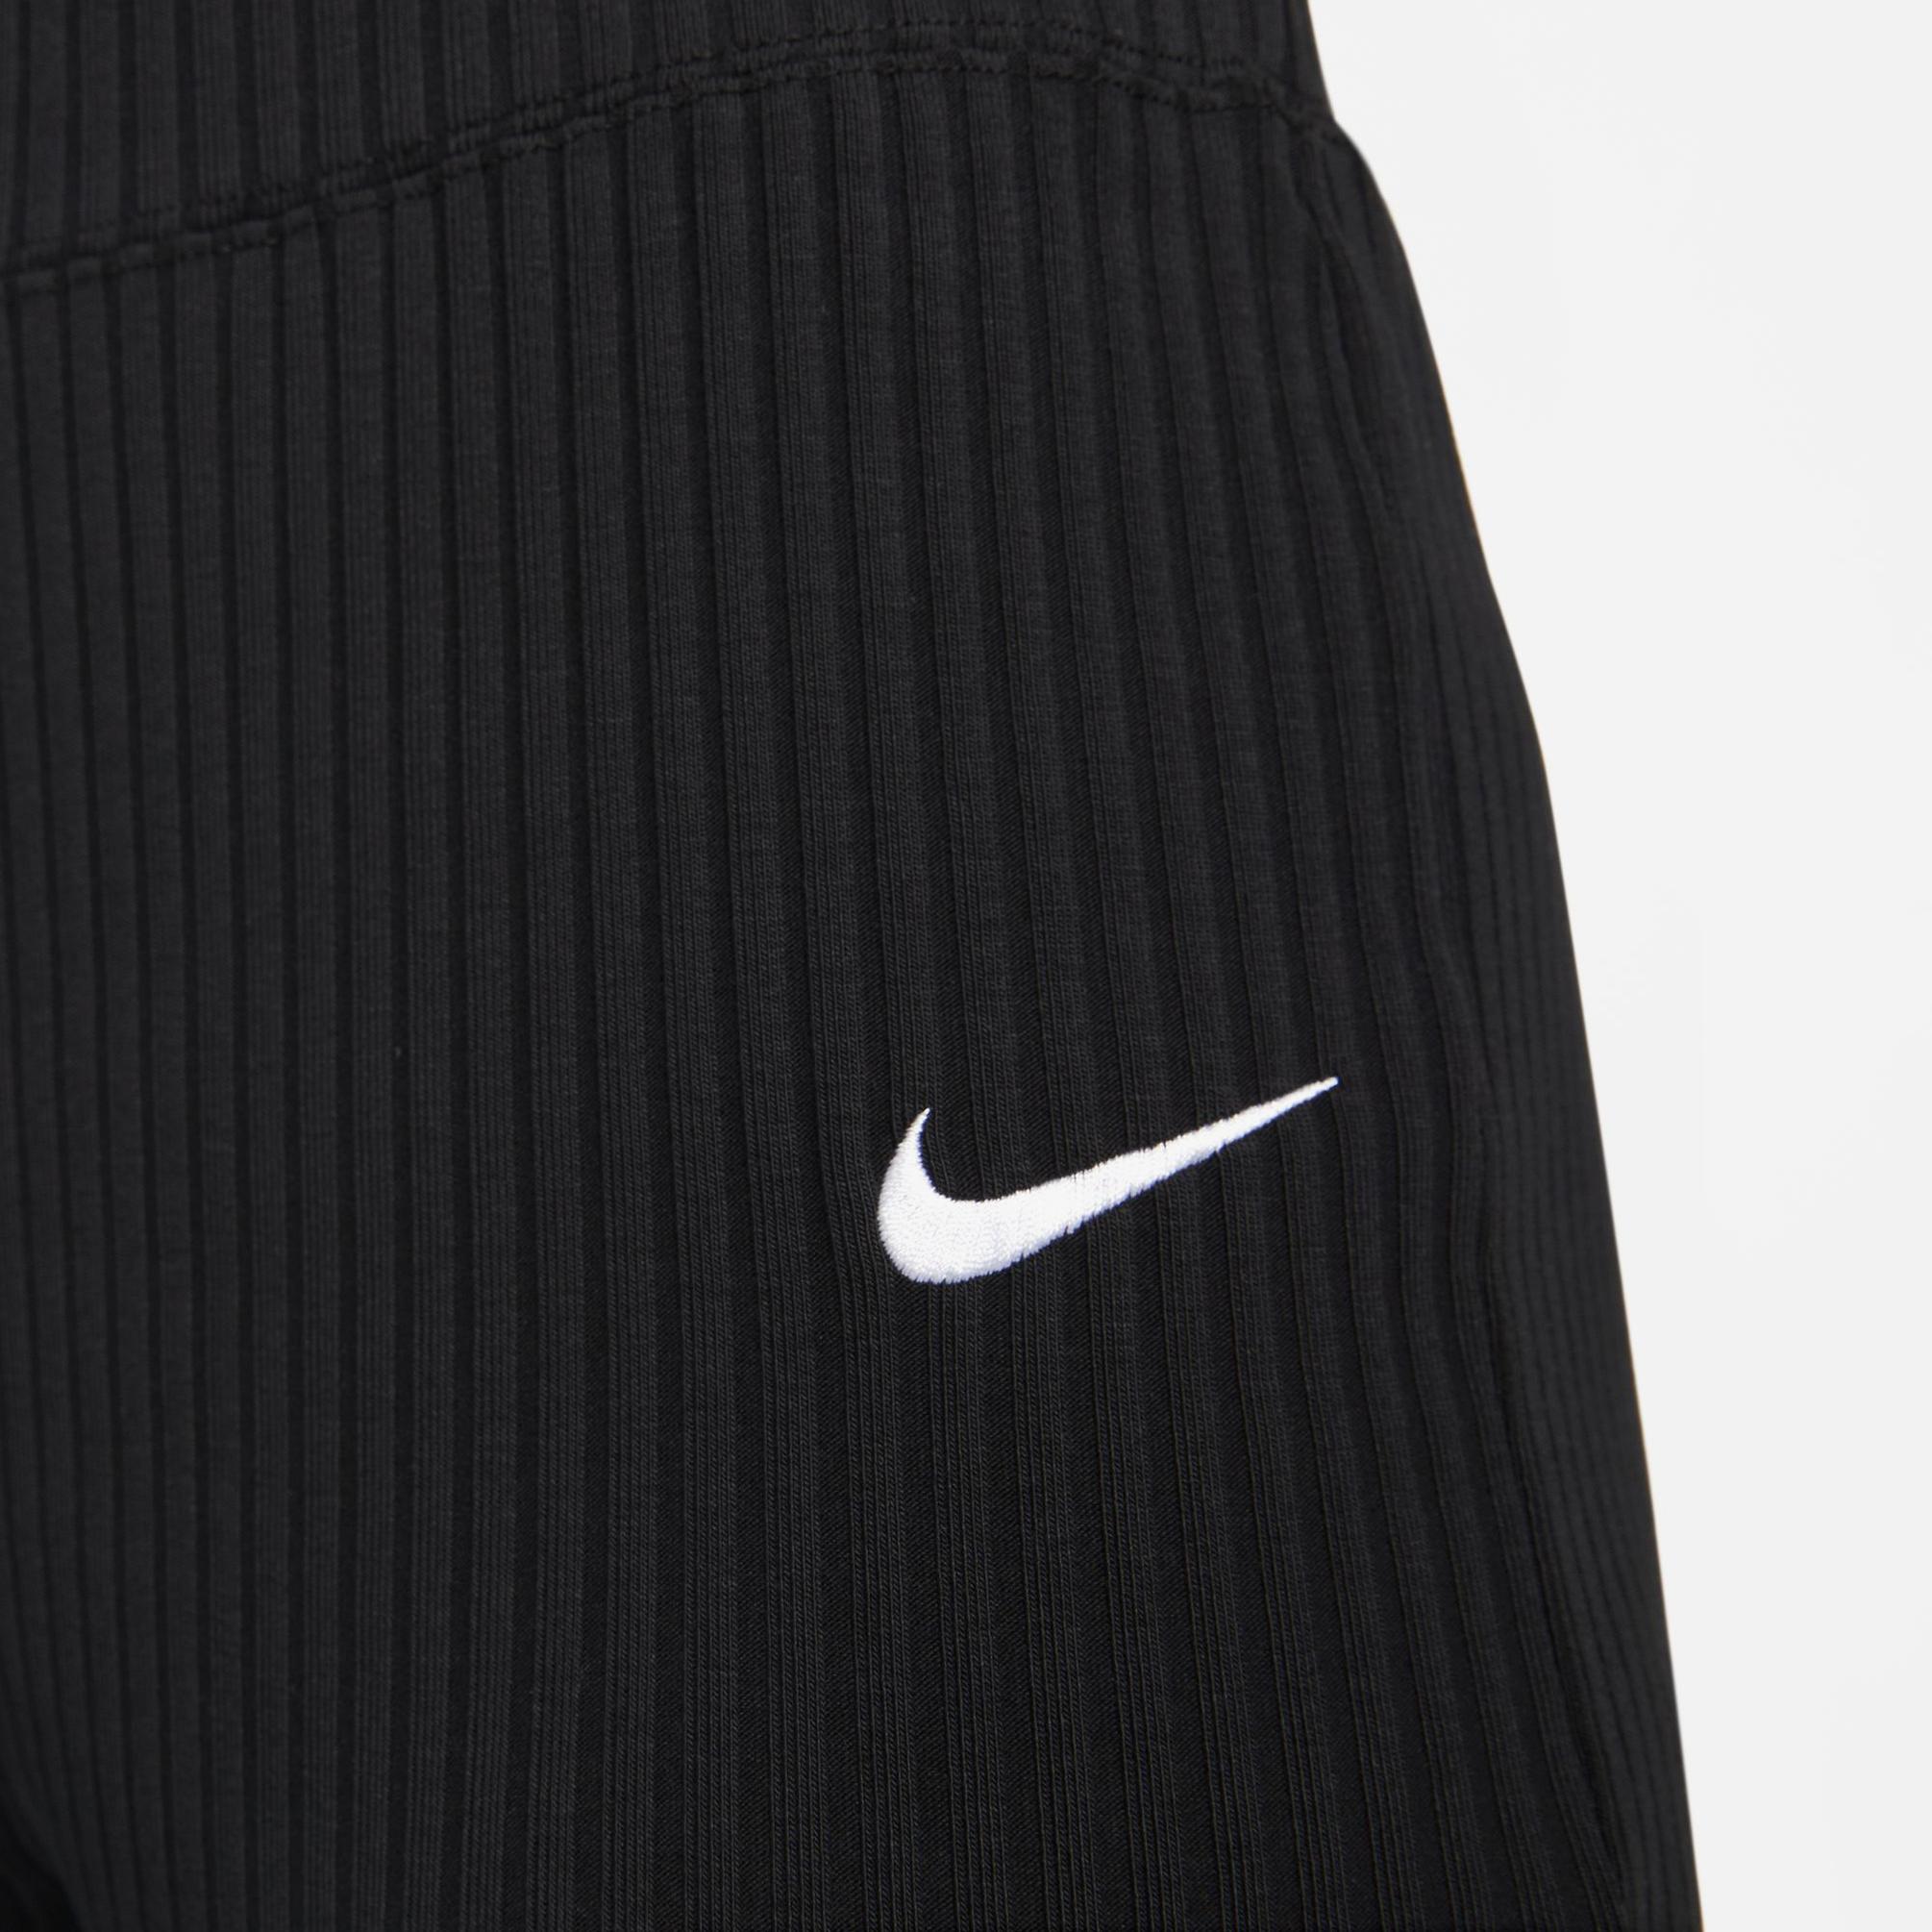  Nike Sportswear Rib Jersey Kadın Siyah Eşofman Altı